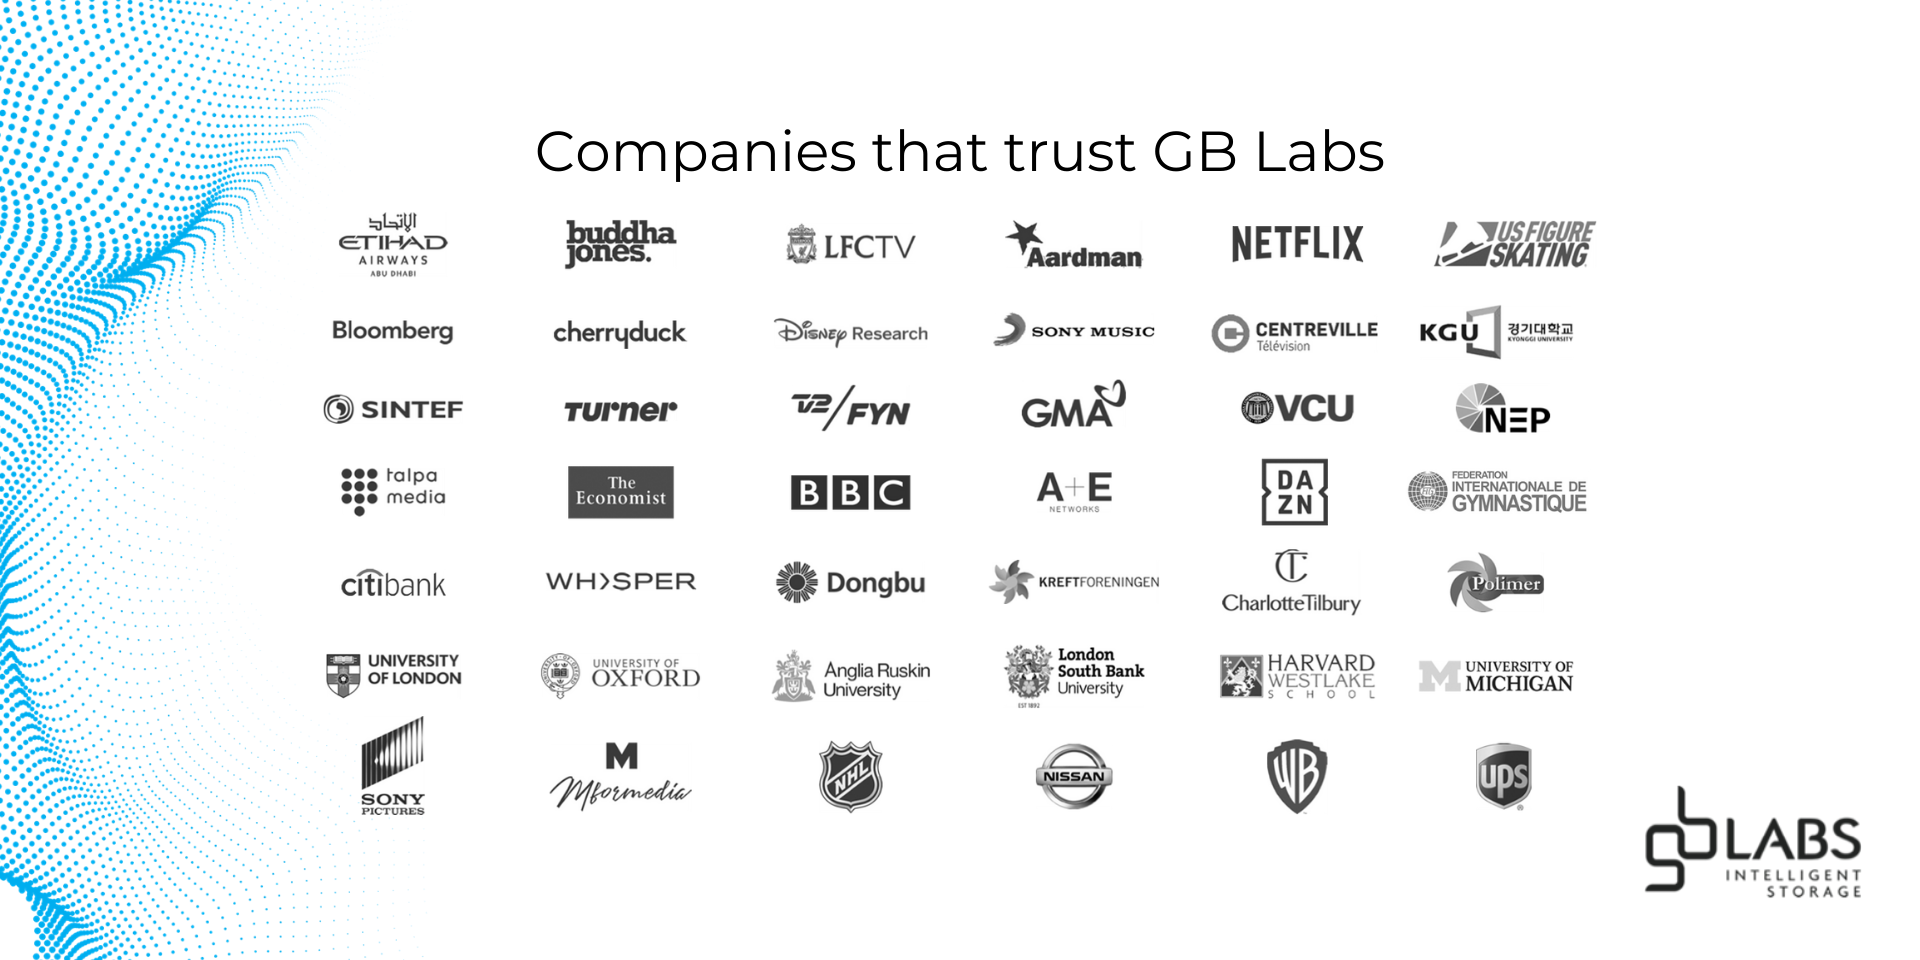 Companies that trust GB Labs